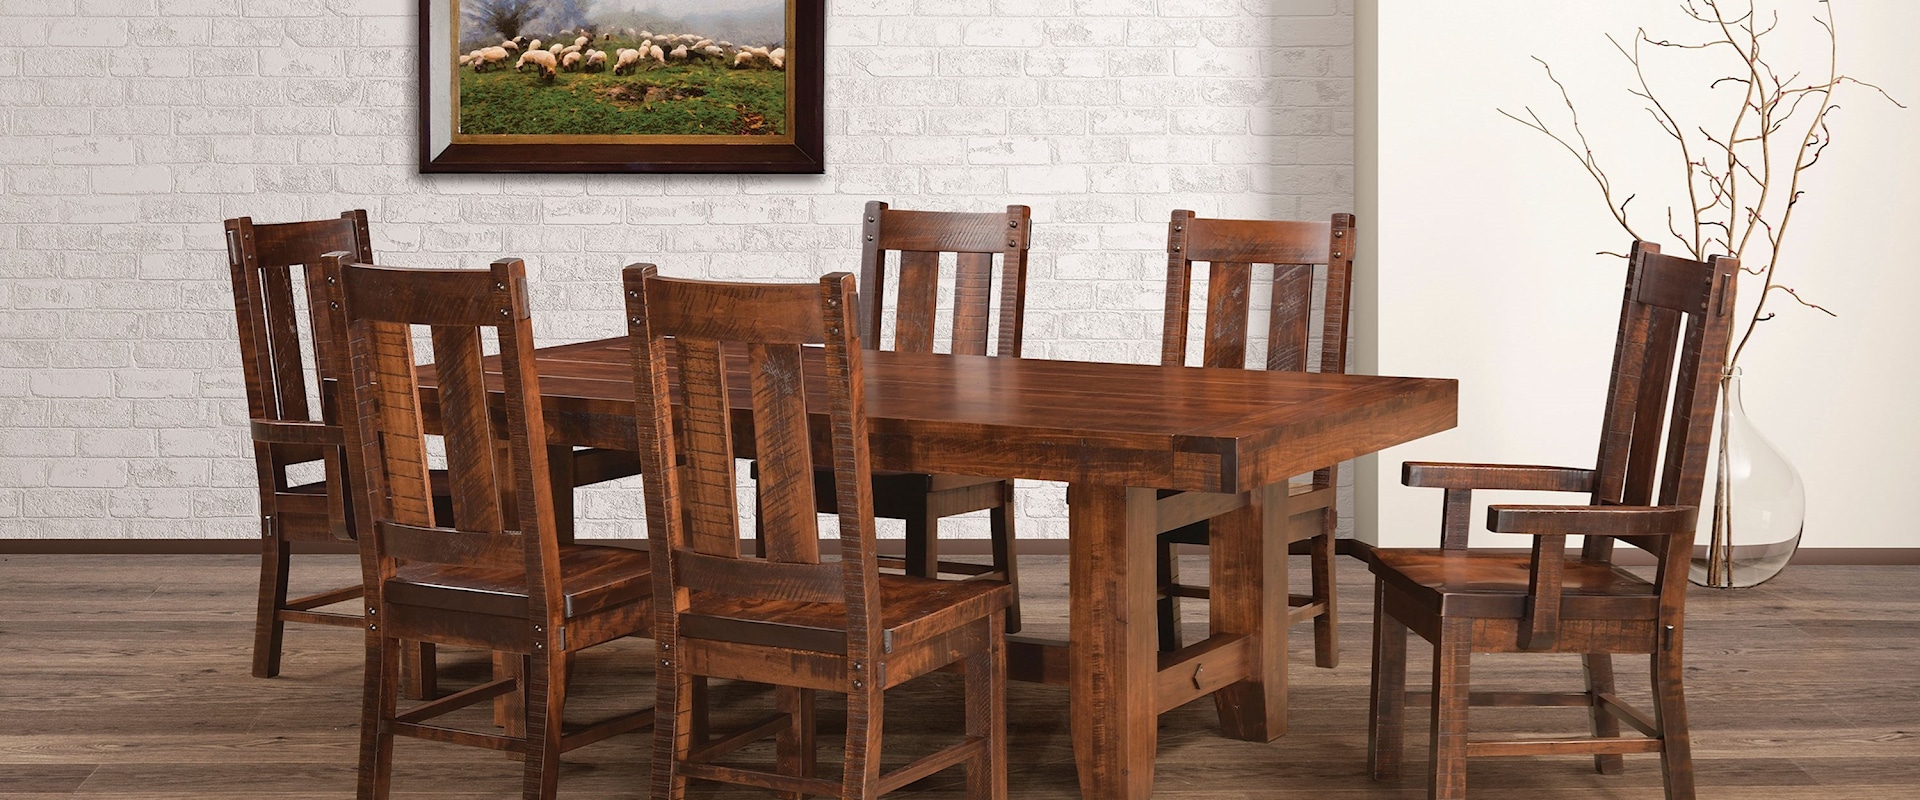 Customizable Table & Chair Set